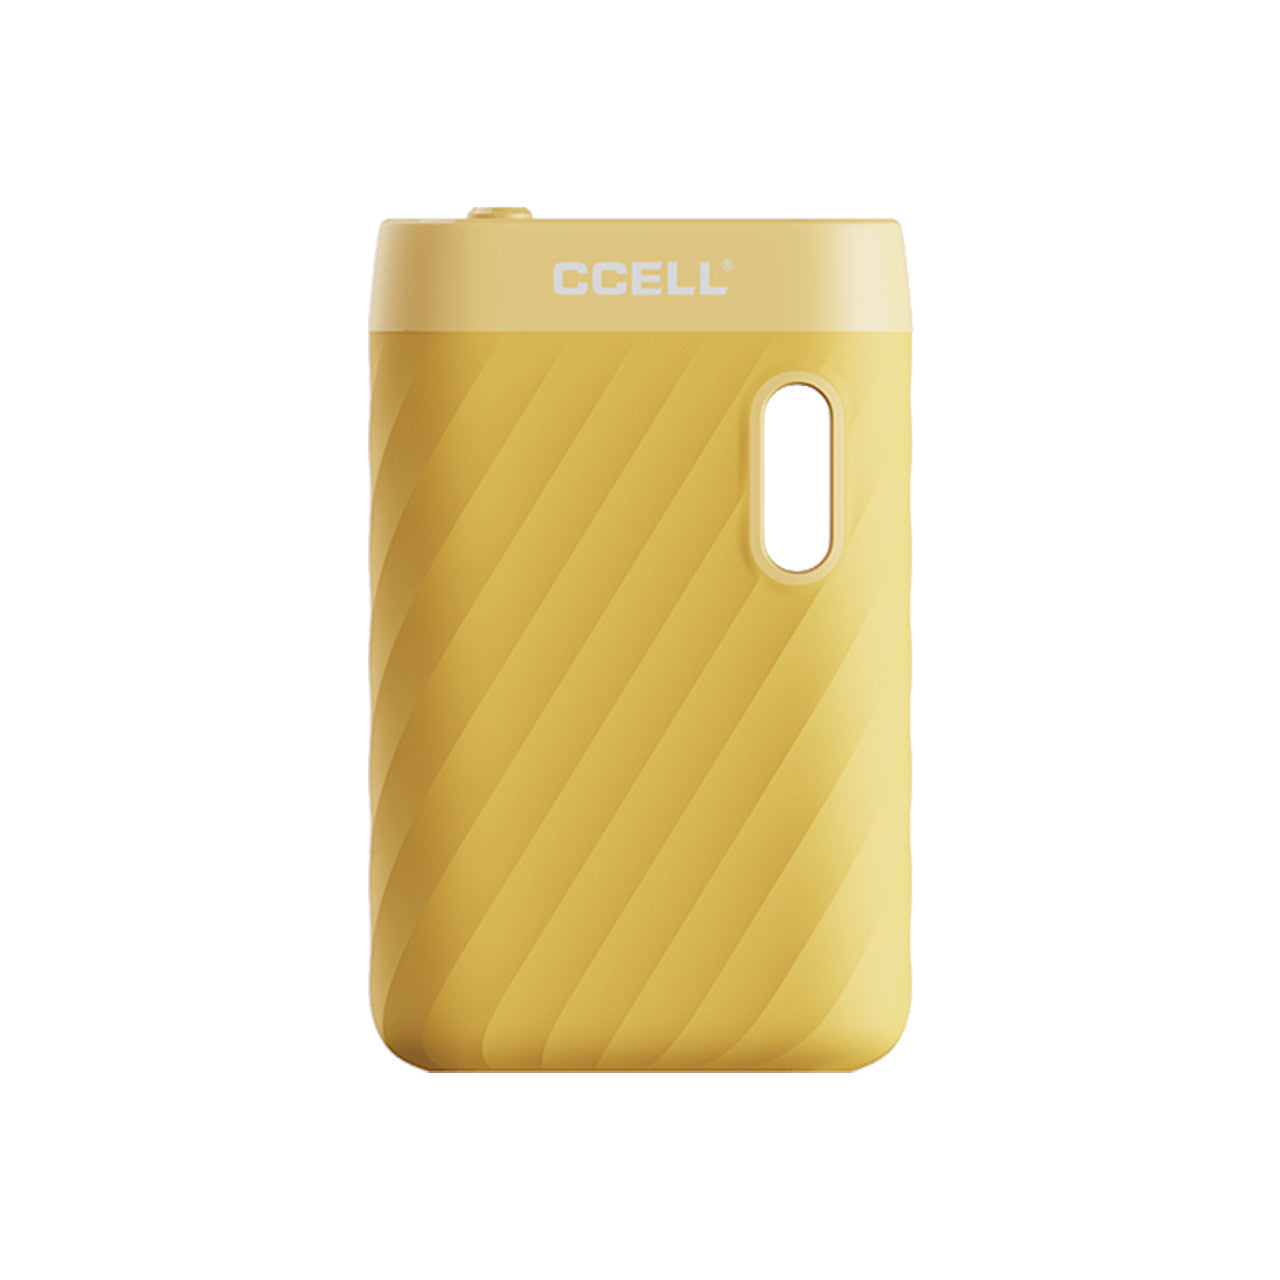 CCELL Sandwave 510 Vape Cartridge Battery Tropical Yellow